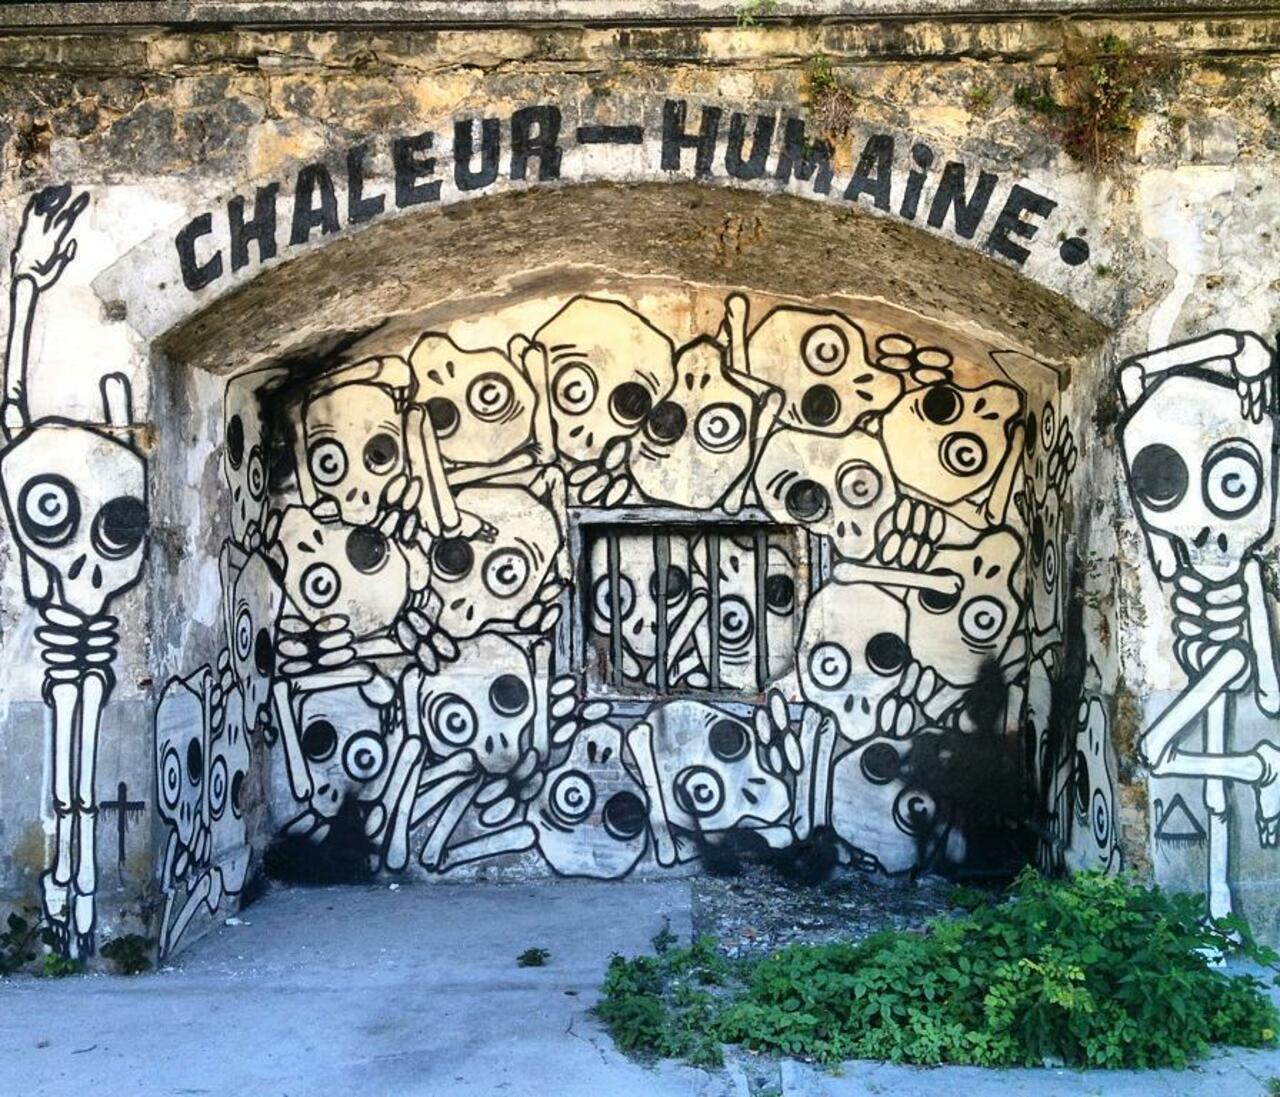 #Paris #graffiti photo by @ceky_art http://ift.tt/1PnlGRP #StreetArt http://t.co/bwMlZYWbST